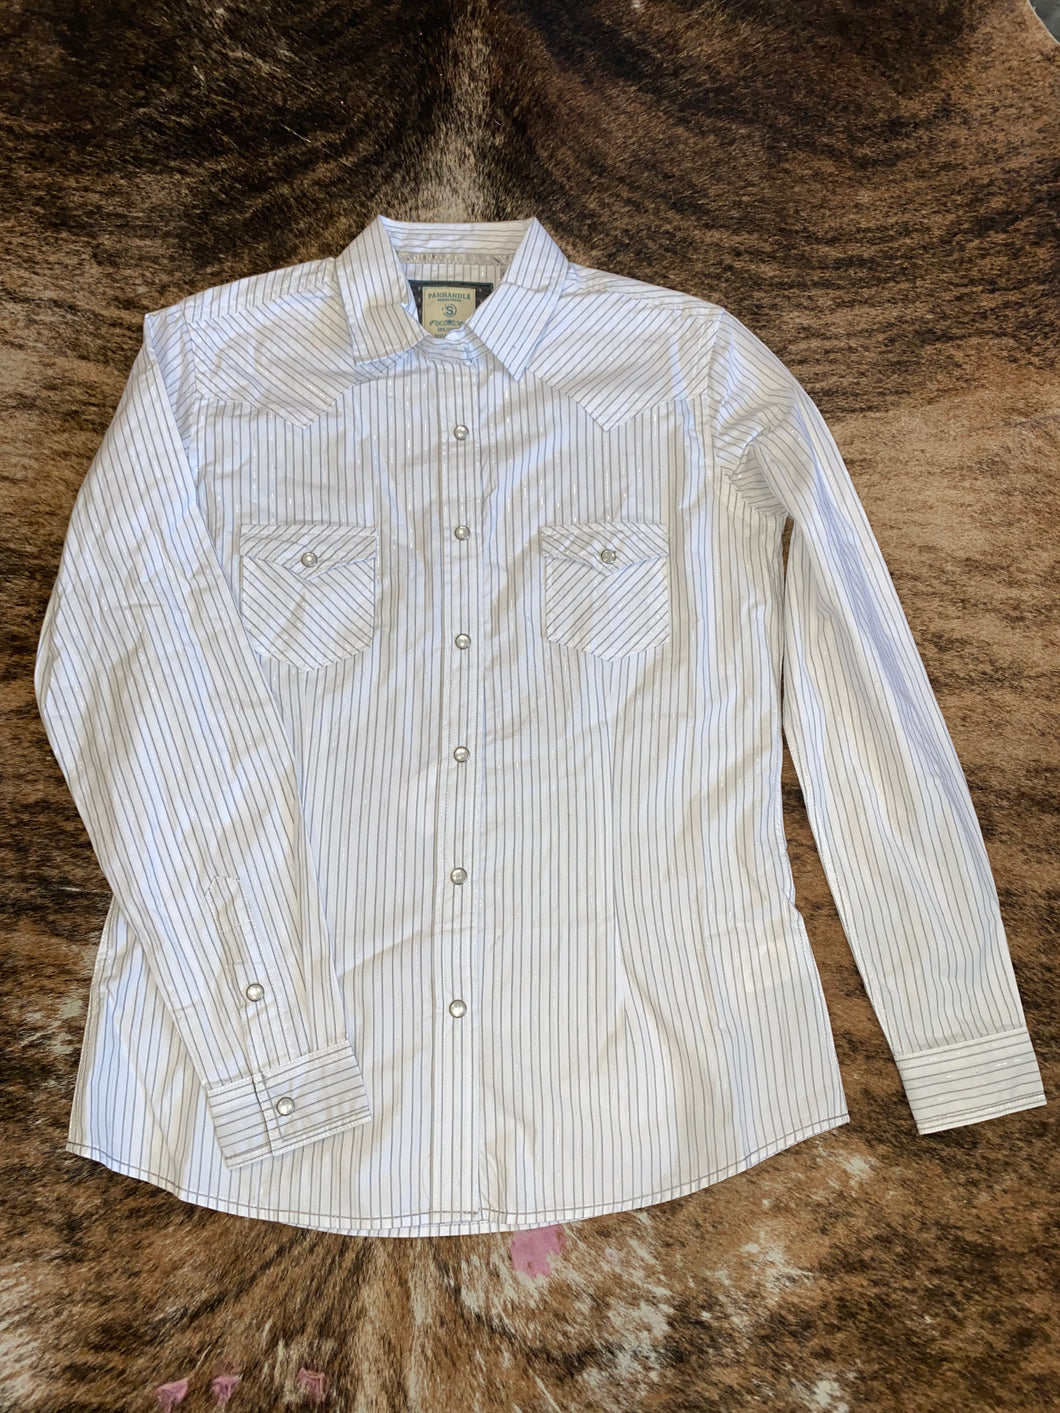 Panhandle Women's Rough Stock White & Gray Pinstripe Western Shirt